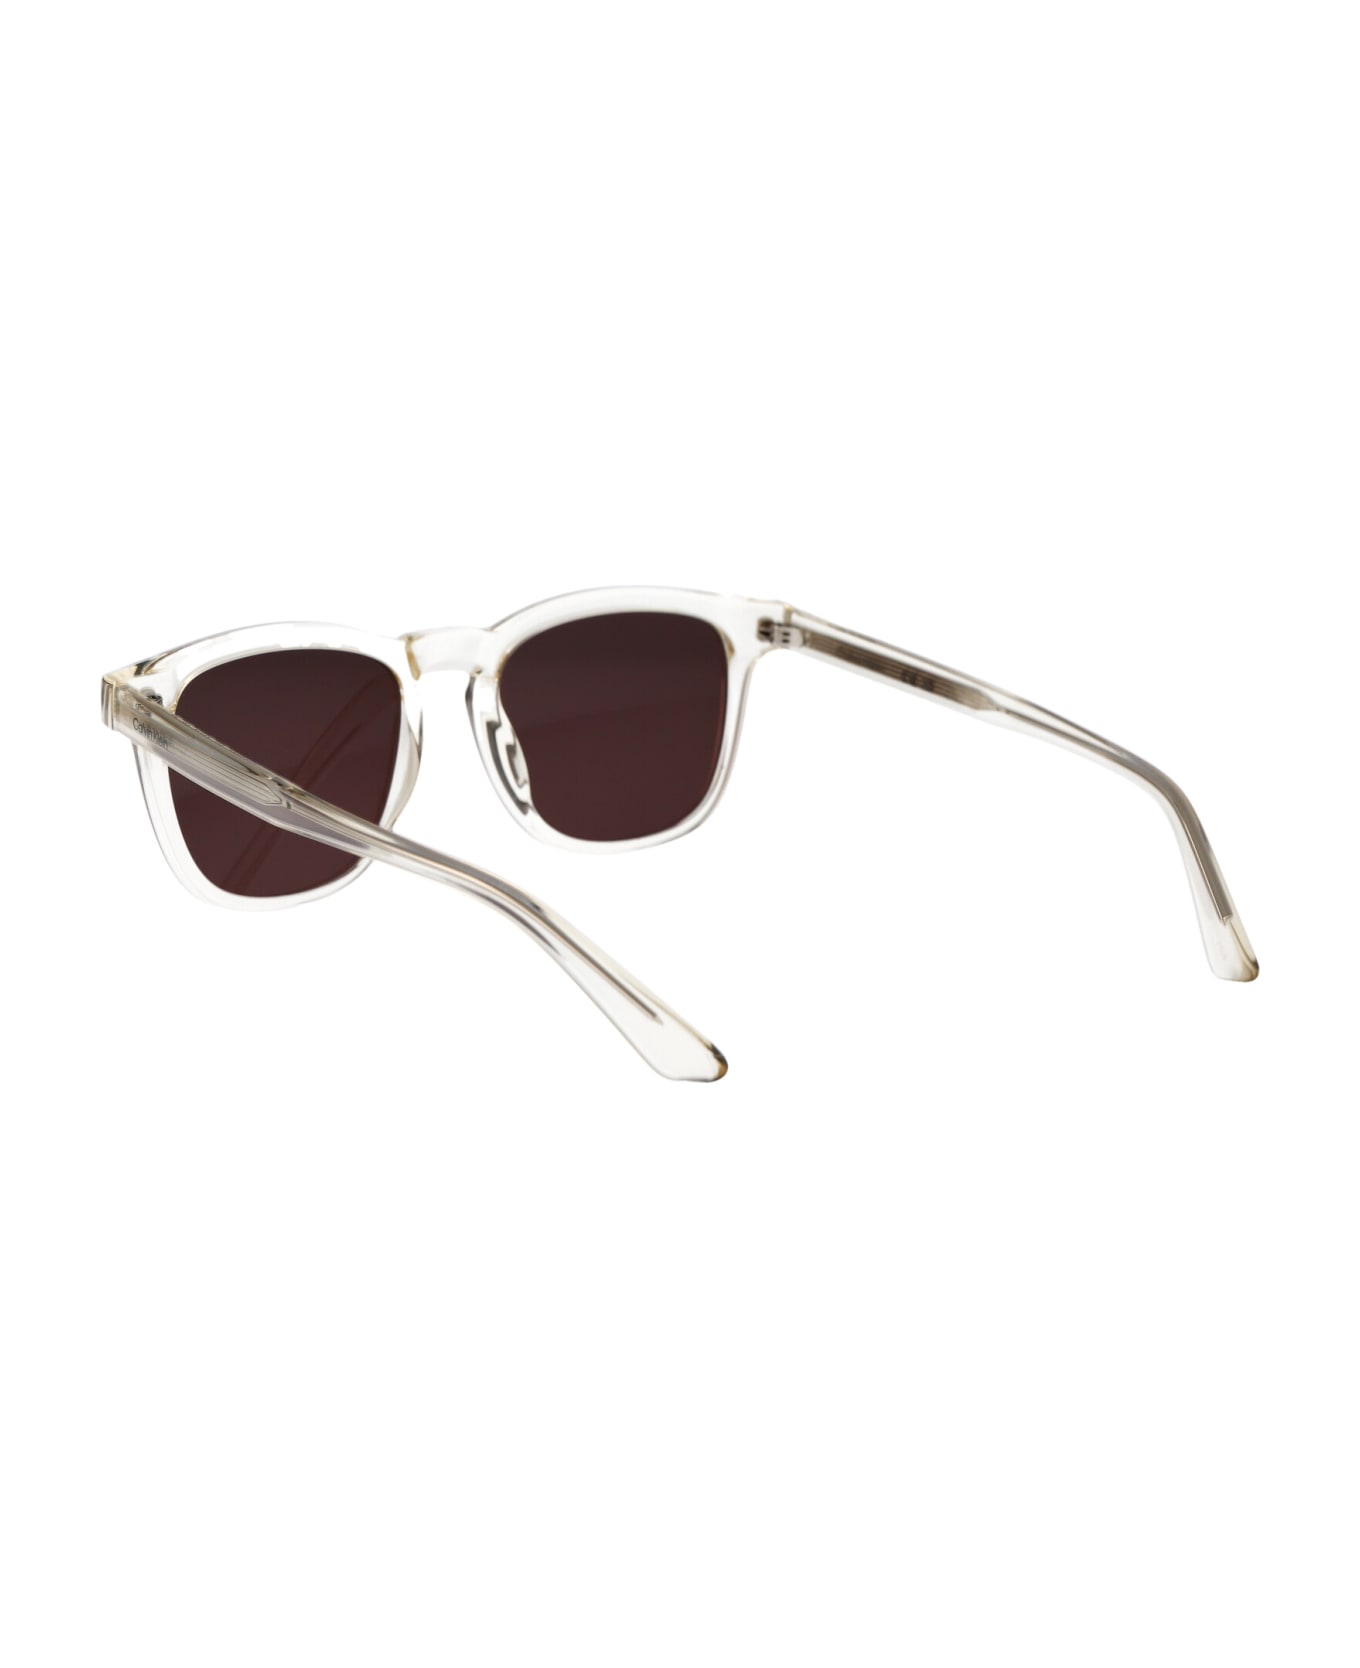 Calvin Klein Ck23505s Sunglasses - 272 SAND